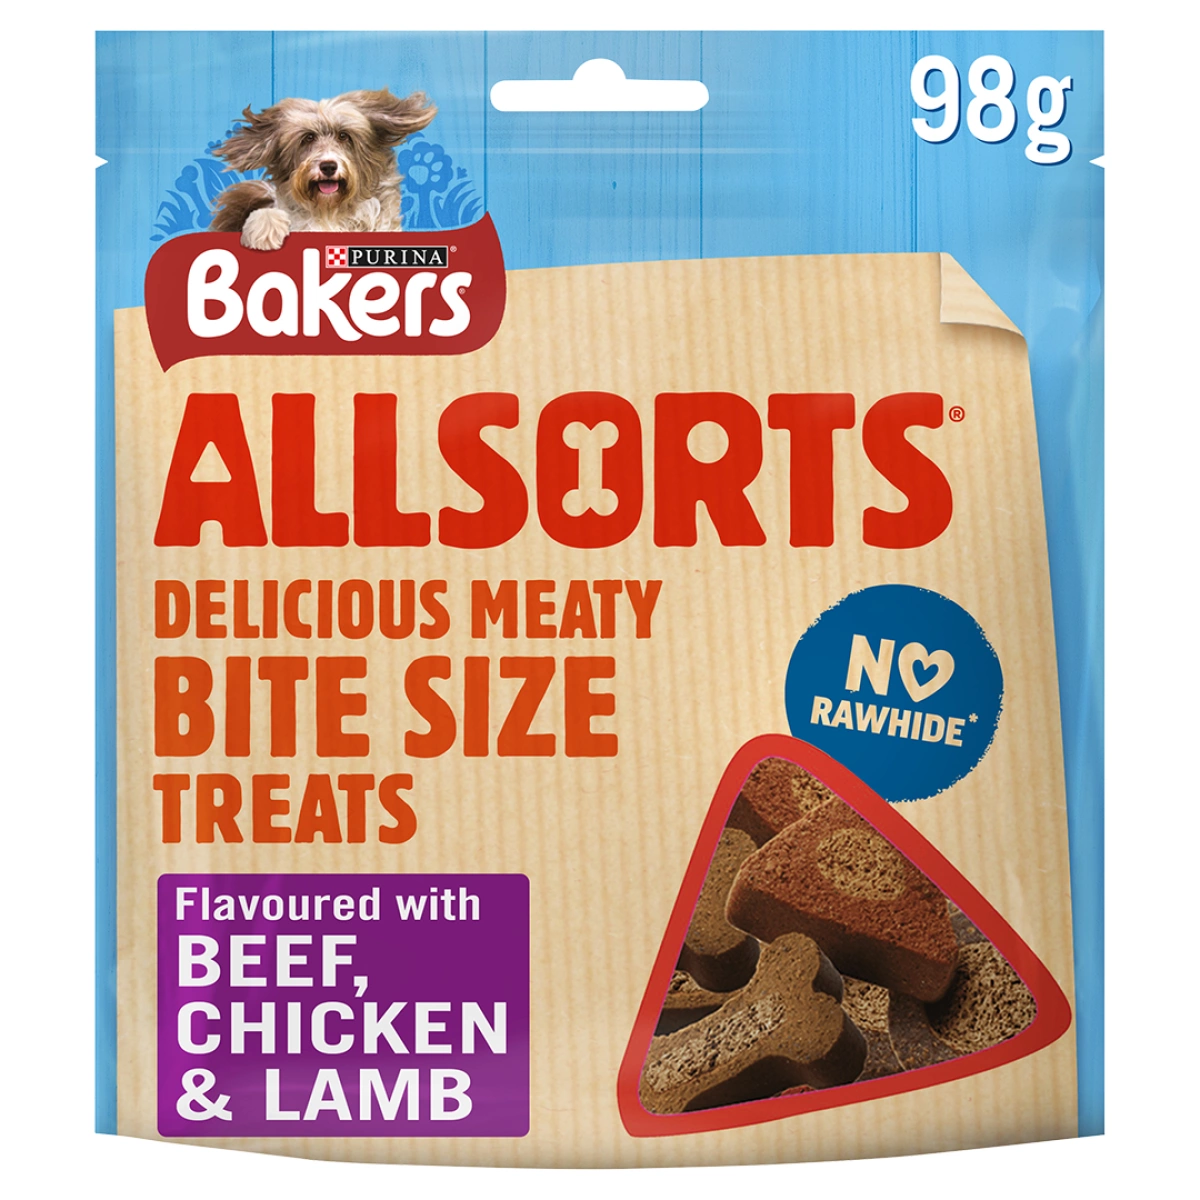 Bakers - Allsorts Dog Treats 98g Main Image